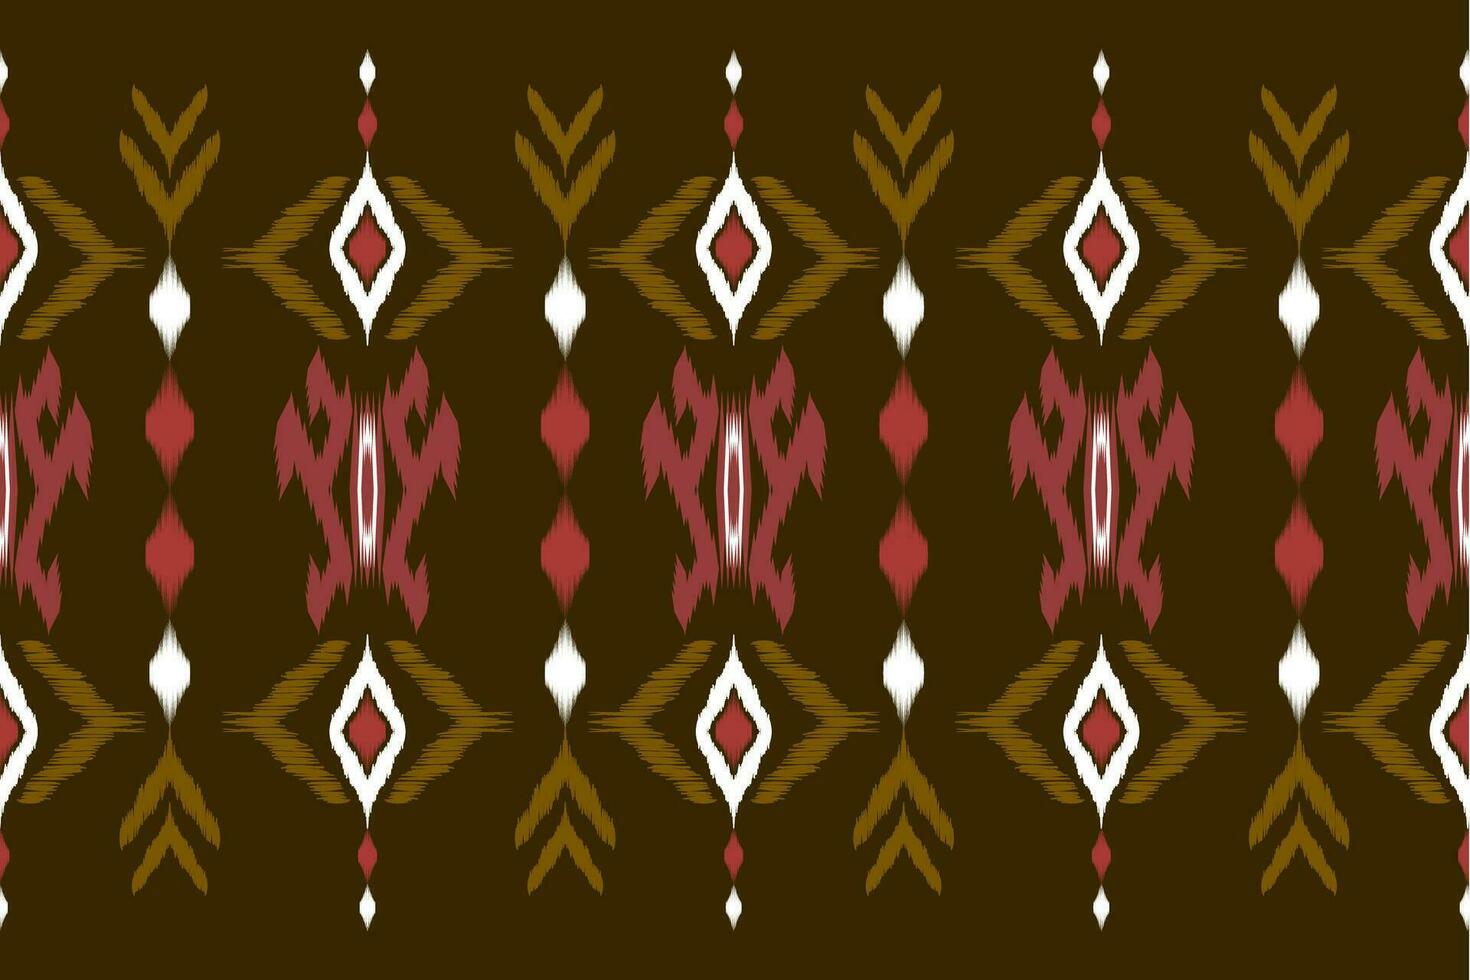 ikat étnico modelo diseño para fondo,alfombra,papel tapiz,ropa,envoltura,batik,tela,vector ilustracion.bordado estilo. vector